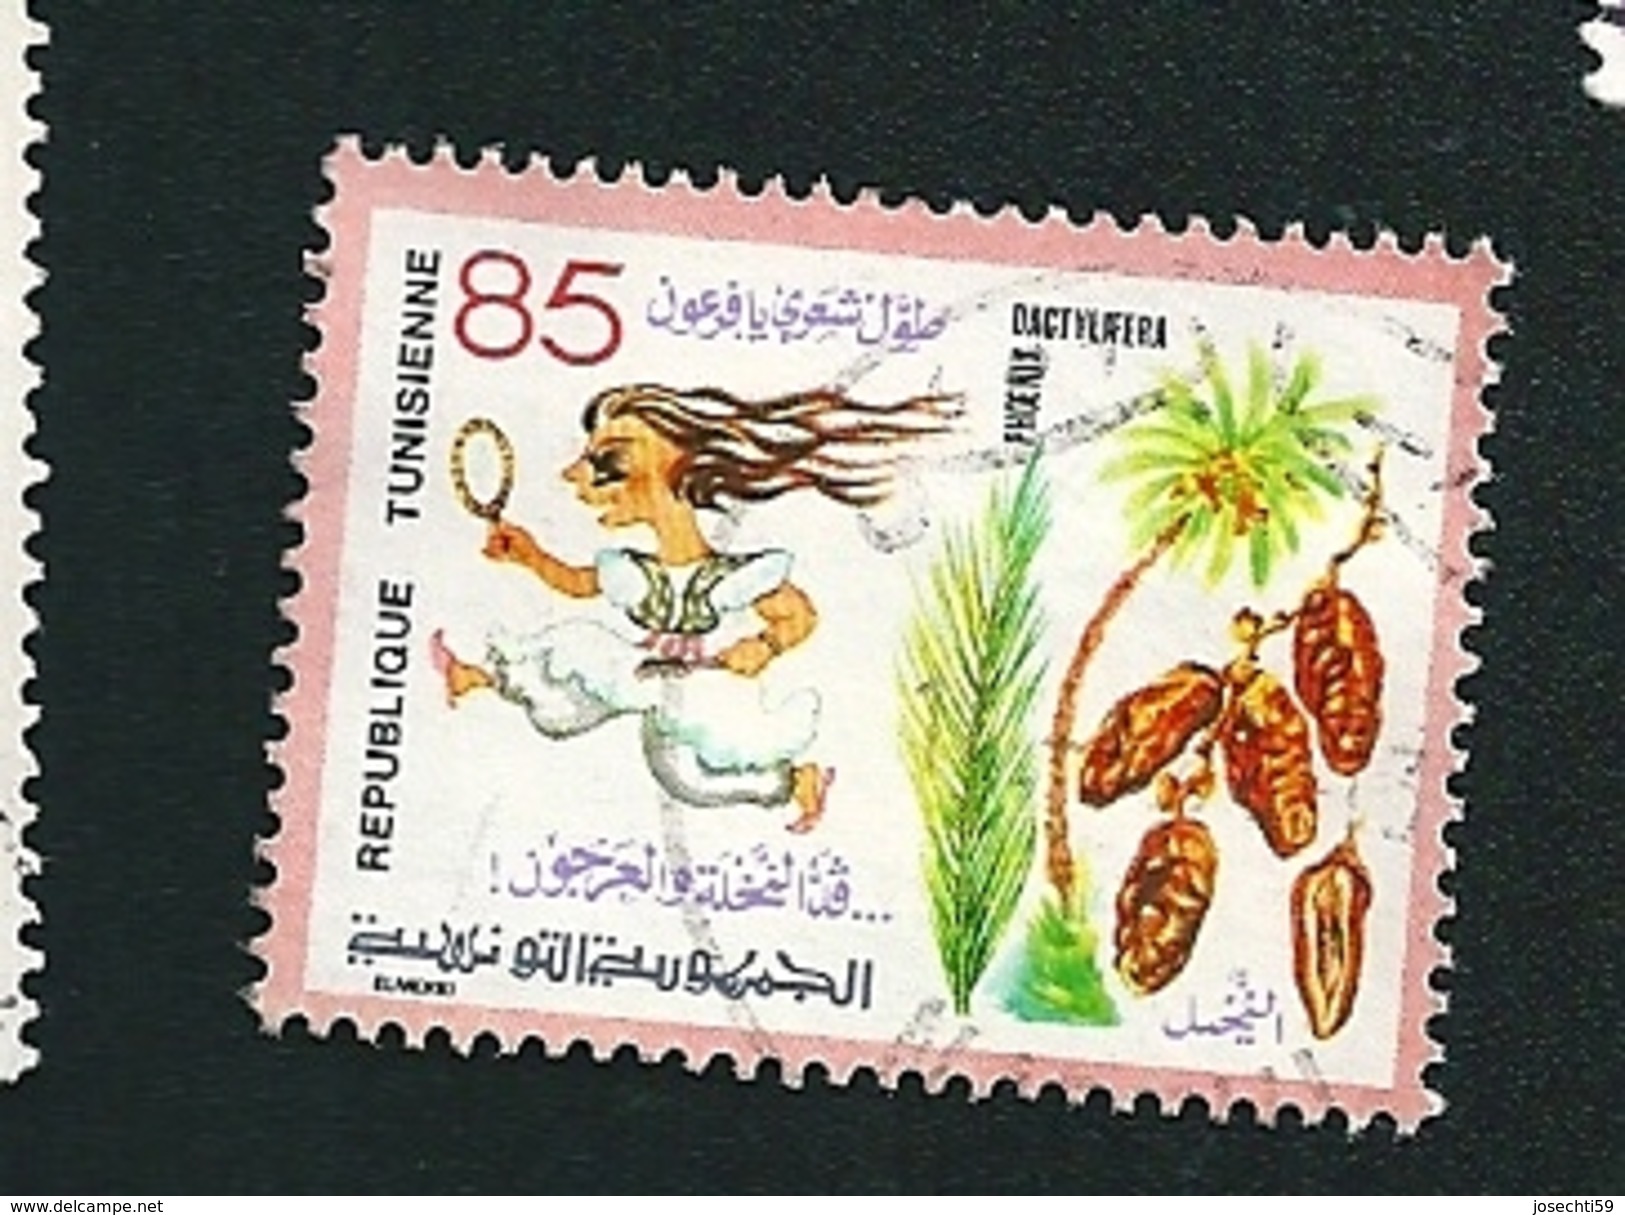 N° 903 Phoenix Dactylifera Timbre Tunisie (1979) Oblitéré - Tunisia (1956-...)